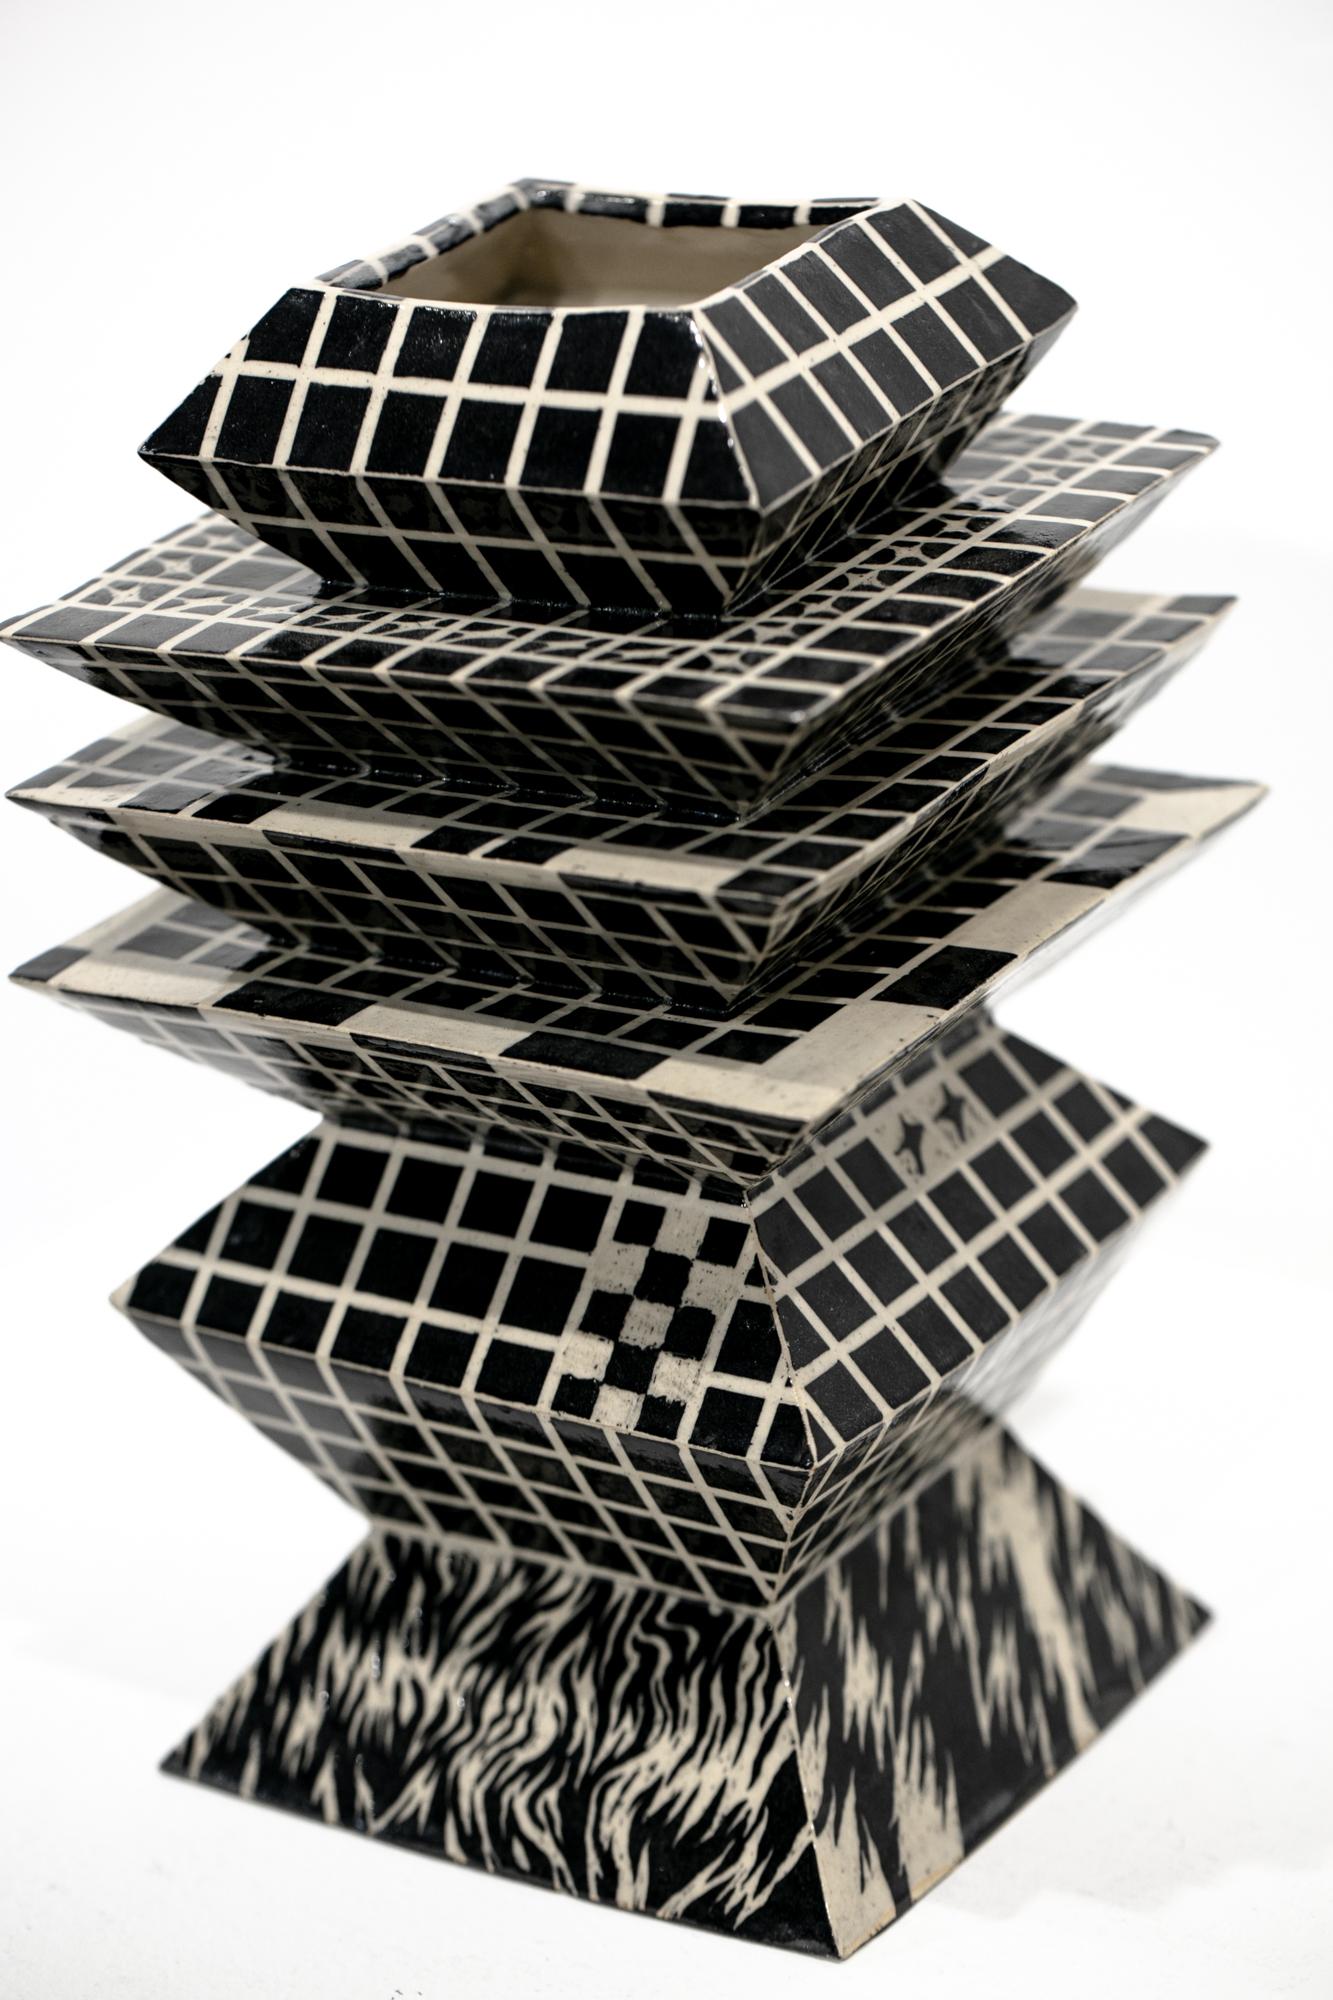 Artificer's Ritual Vessel - Contemporary Sculpture by Alex Kovacs